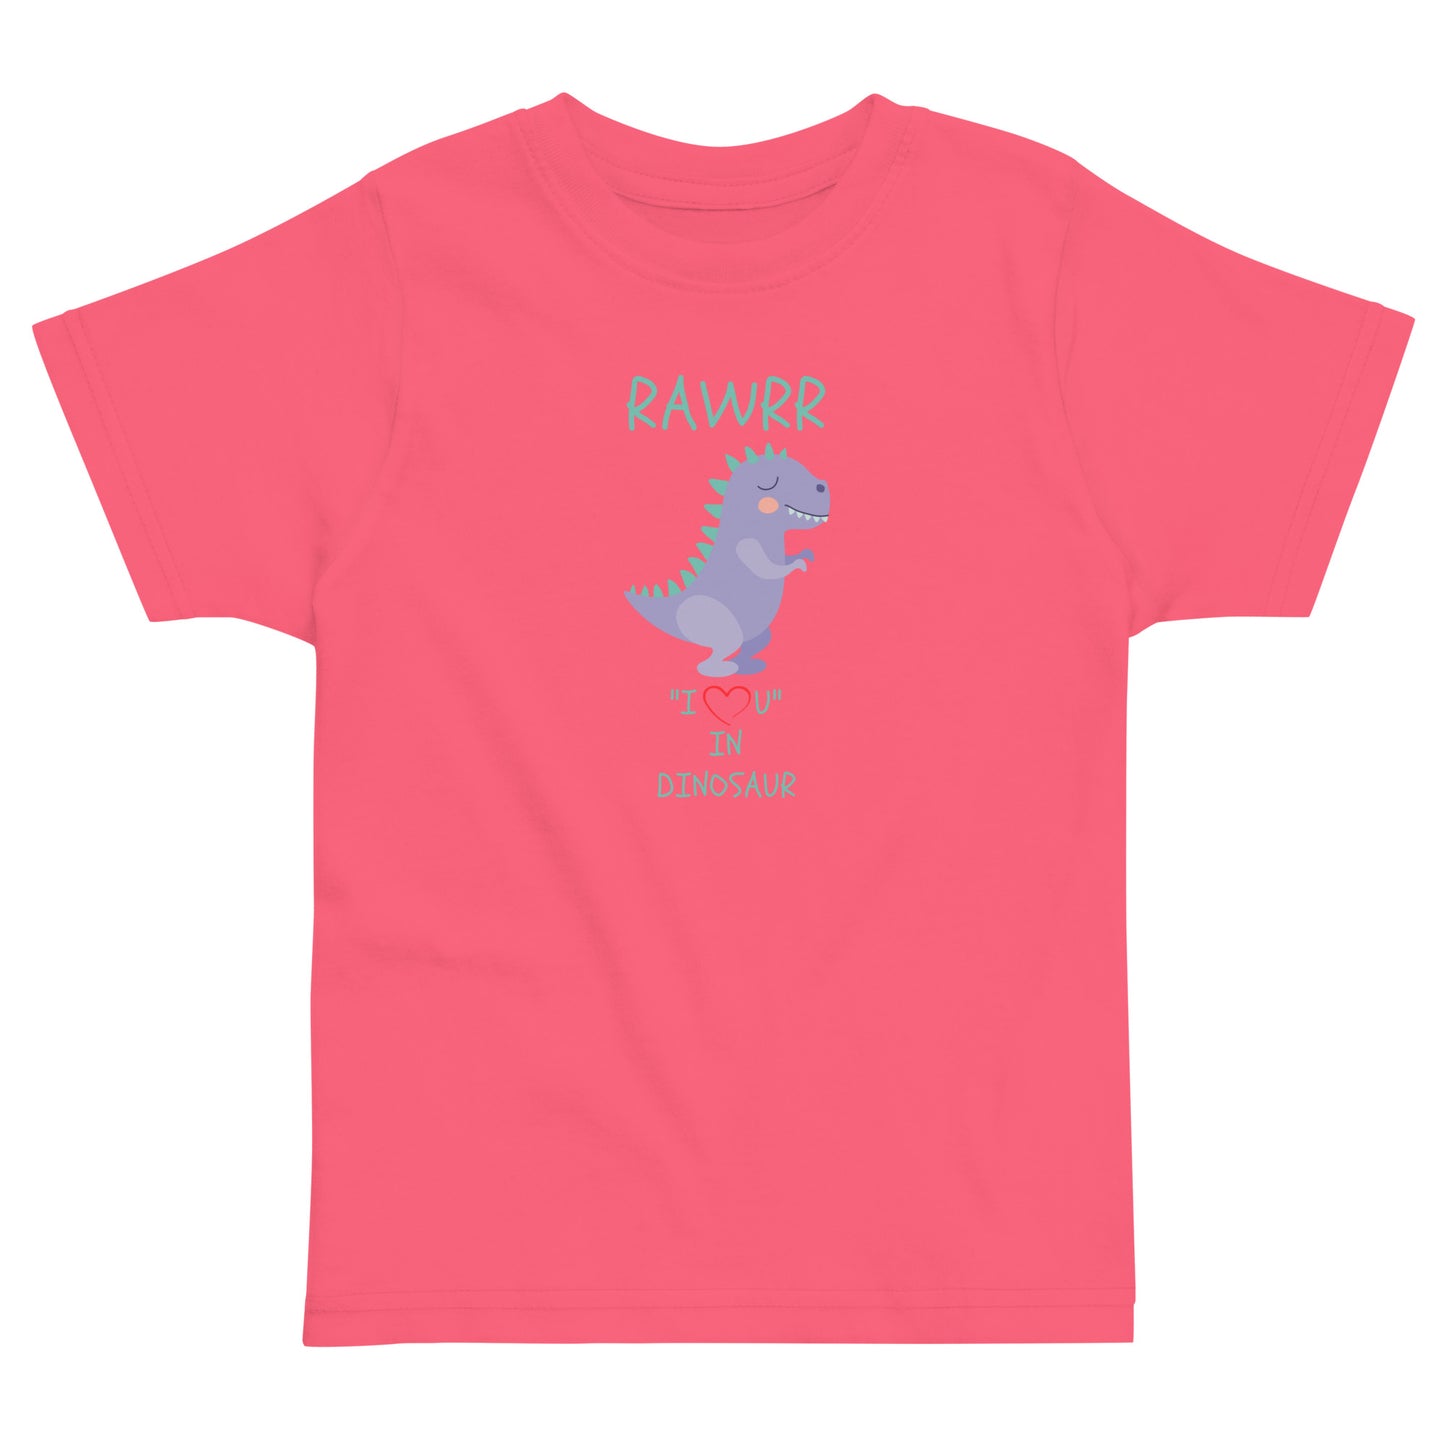 RAWRR "I Love You" In Dinosaur Toddler jersey t-shirt